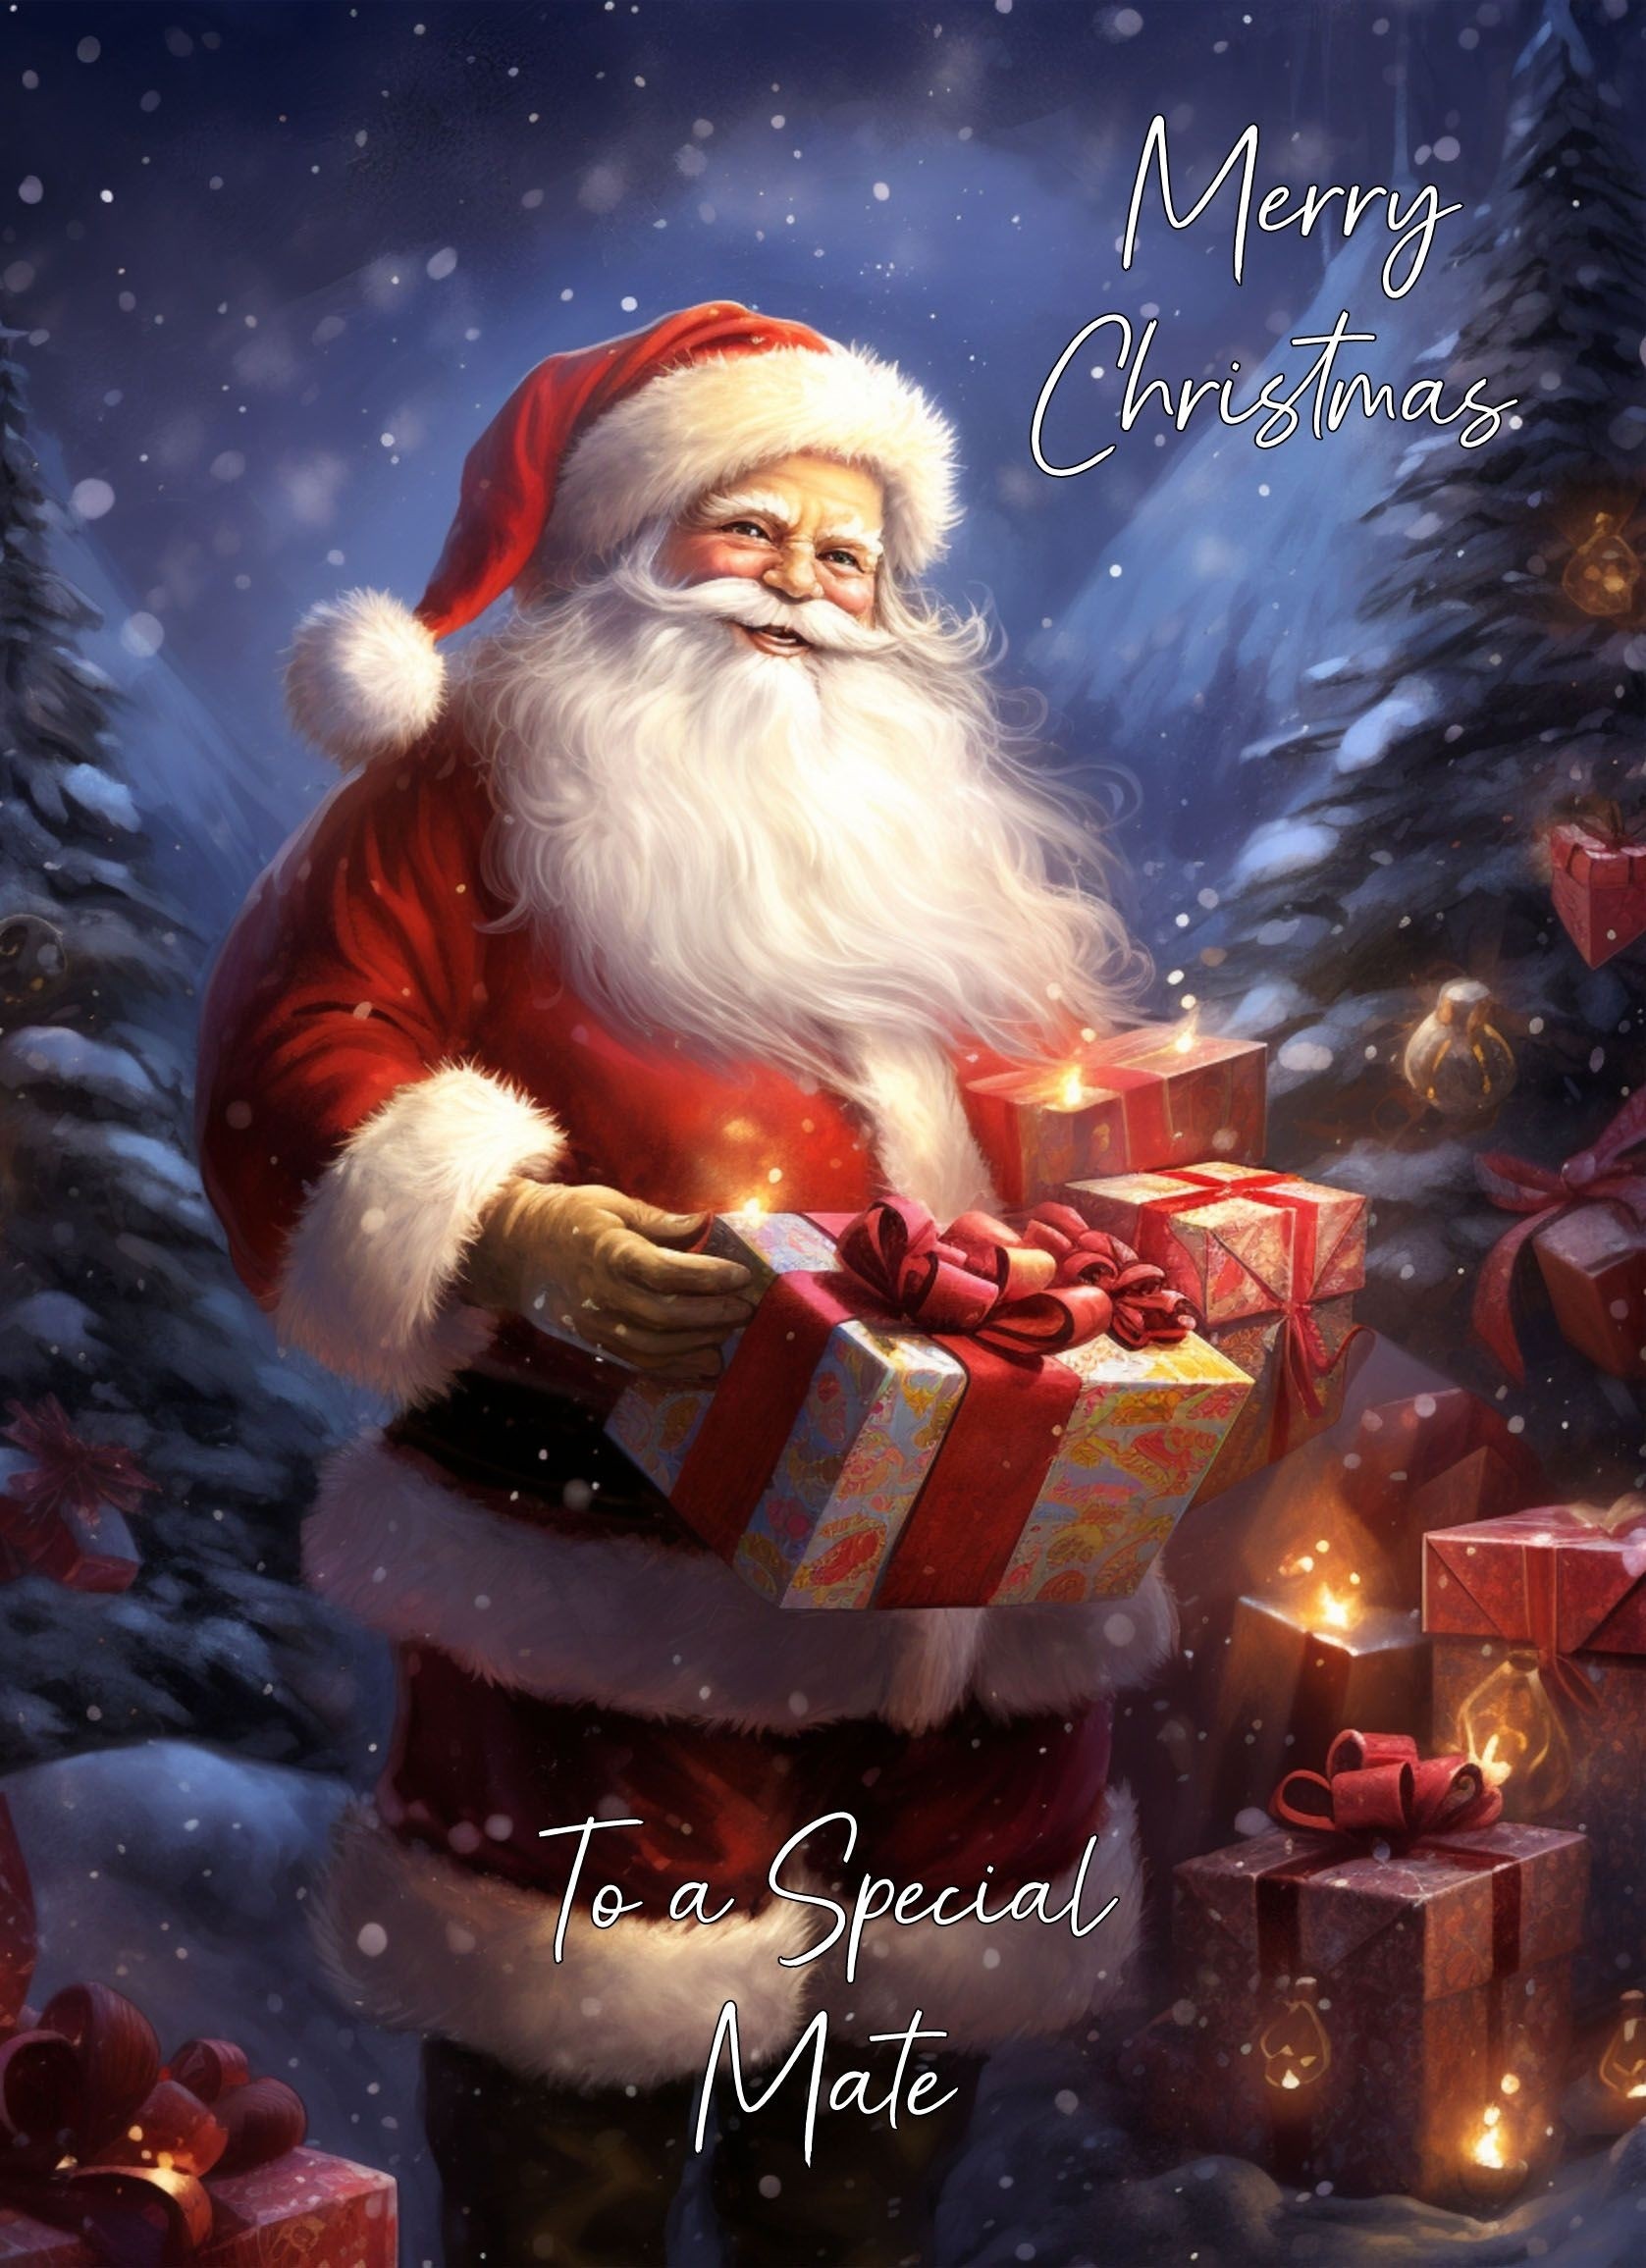 Christmas Card For Mate (Santa Claus)